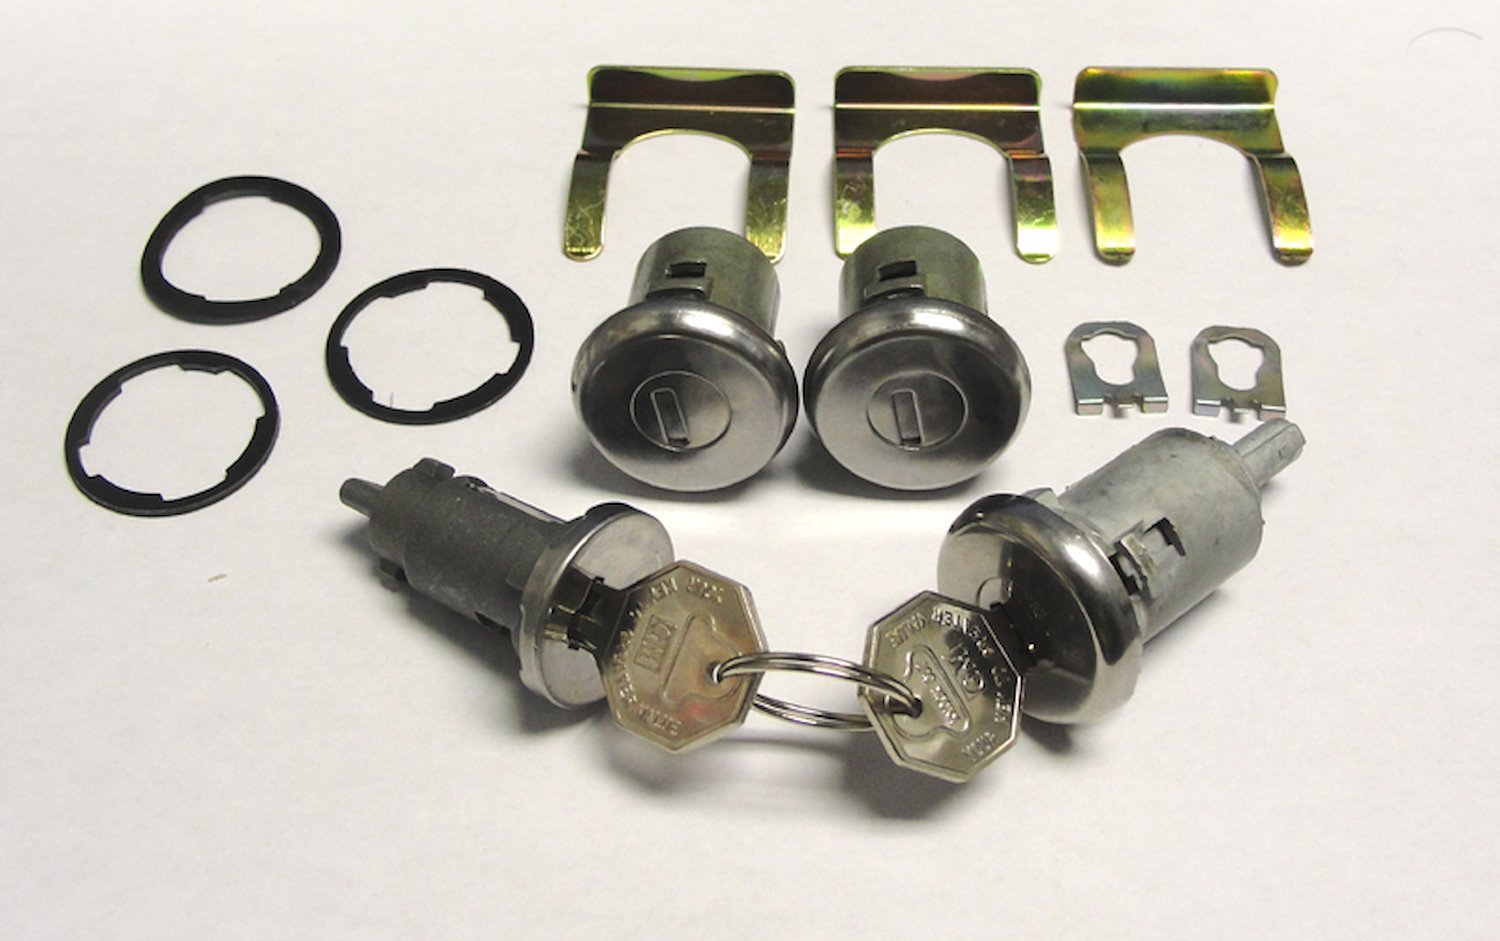 Ignition, Door & Rear Door Lock Set Fits Select 1967-1972 Chevrolet Suburban Models [Original Octagon Keys]